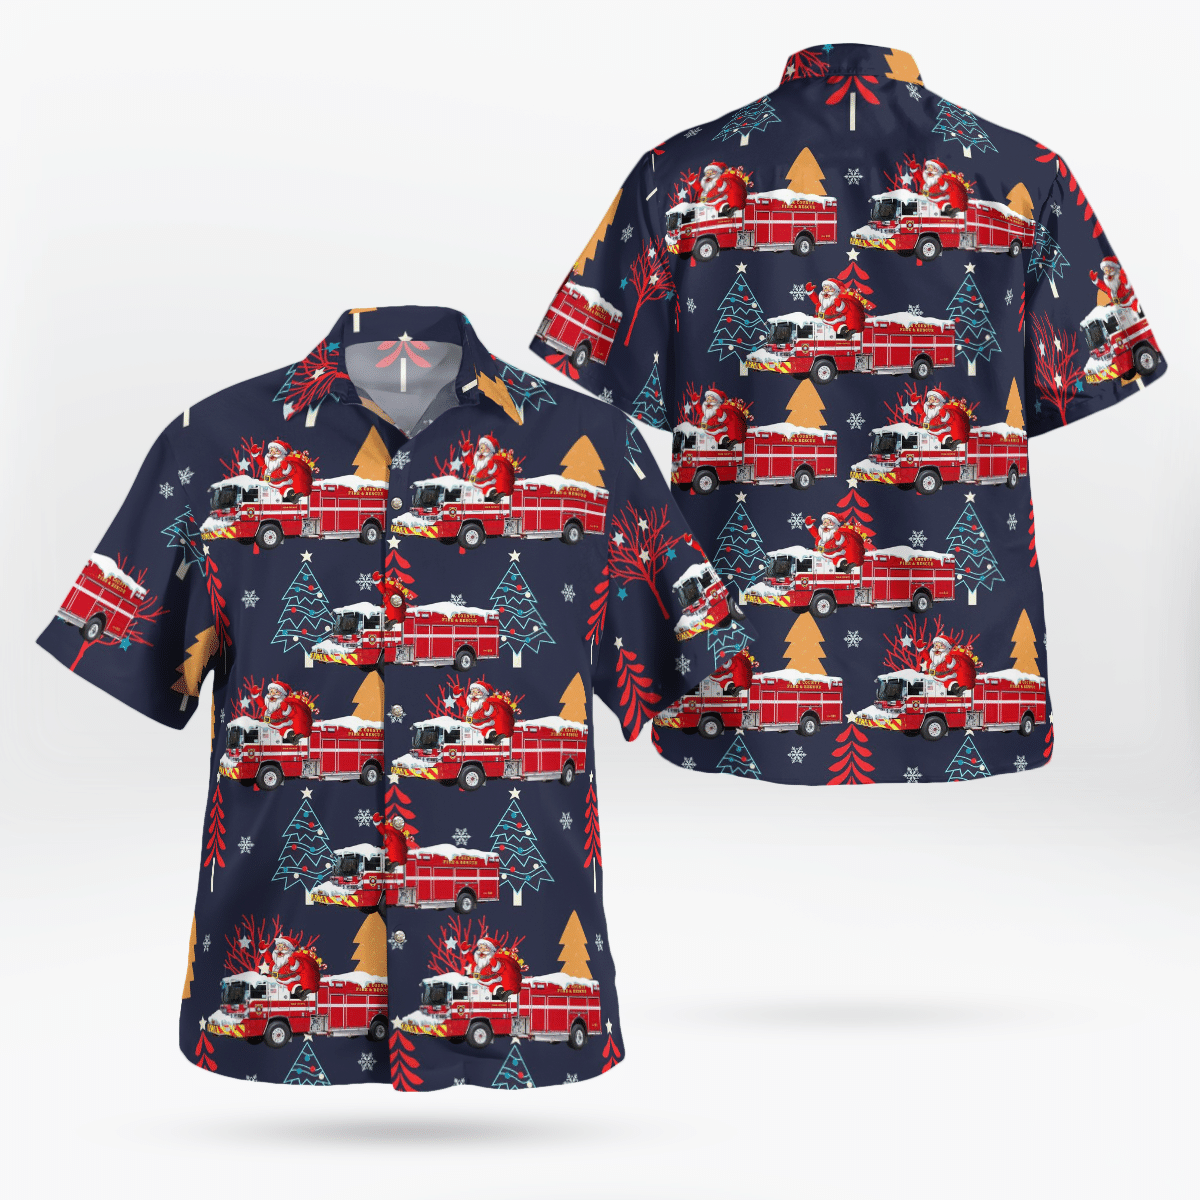 Why don't you order Hot Hawaiian Shirt today? 71